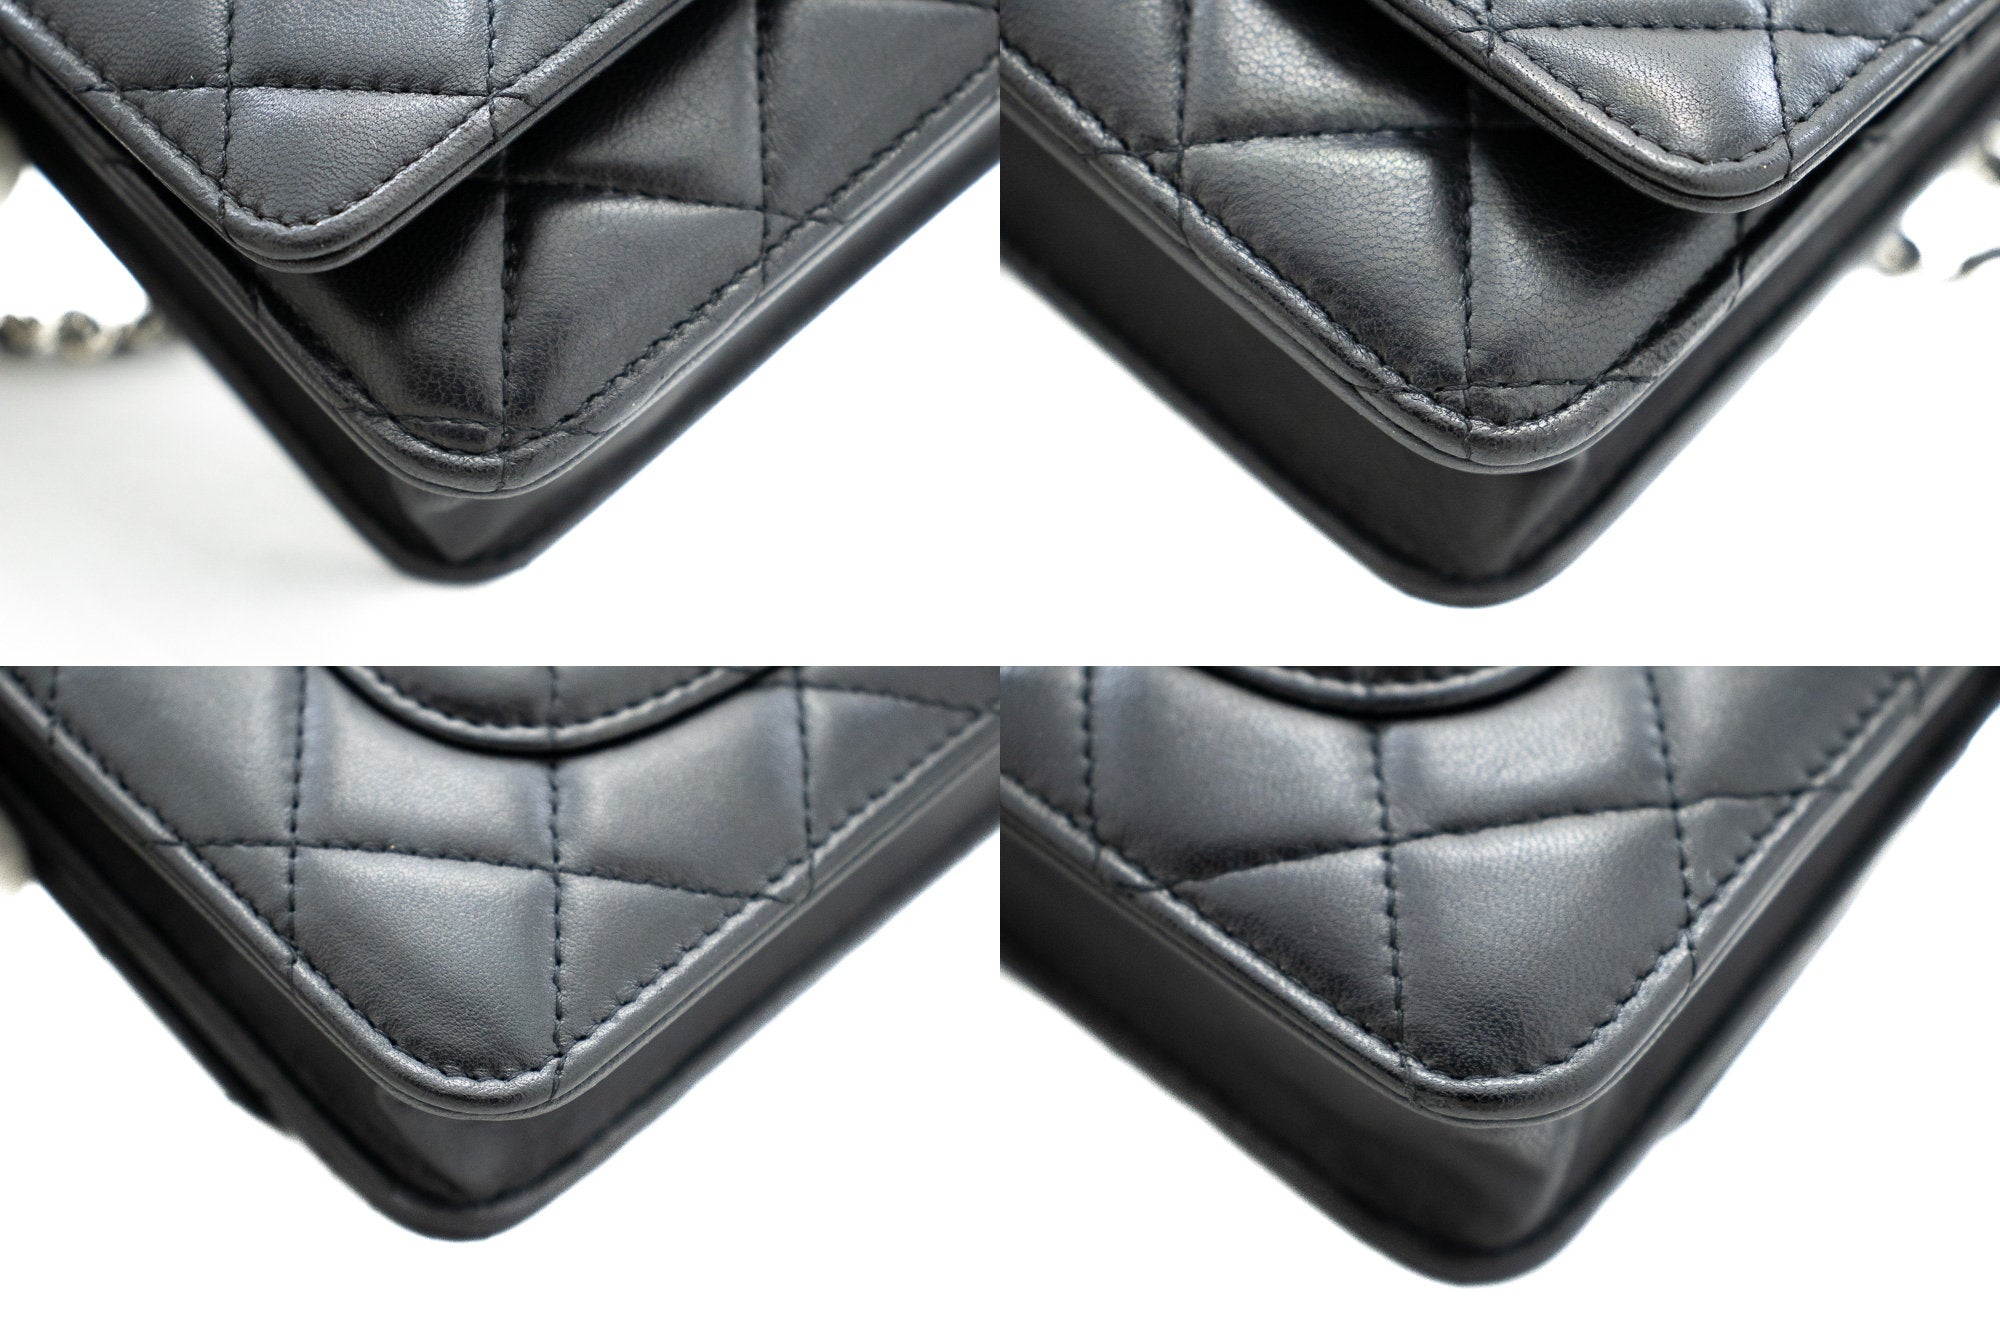 CHANEL Black Classic Wallet On Chain WOC Shoulder Bag Lambskin j46 –  hannari-shop